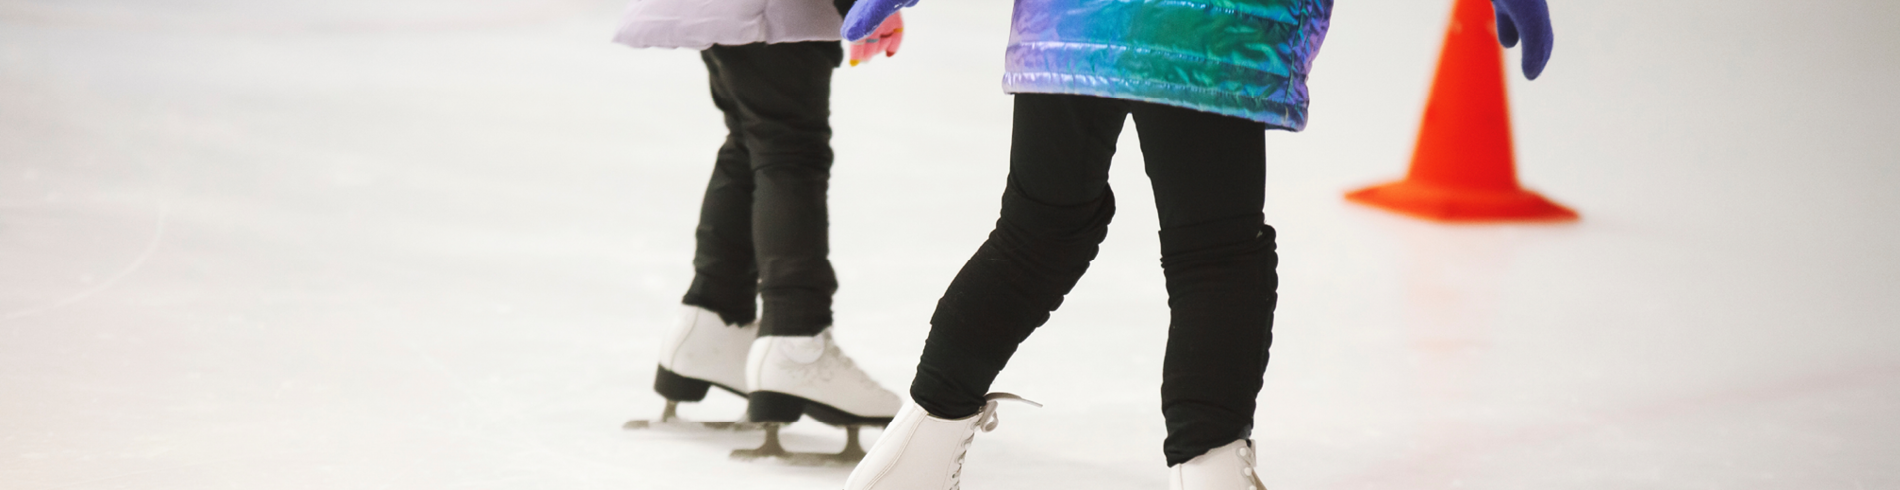 Legs with white figure skates on skating